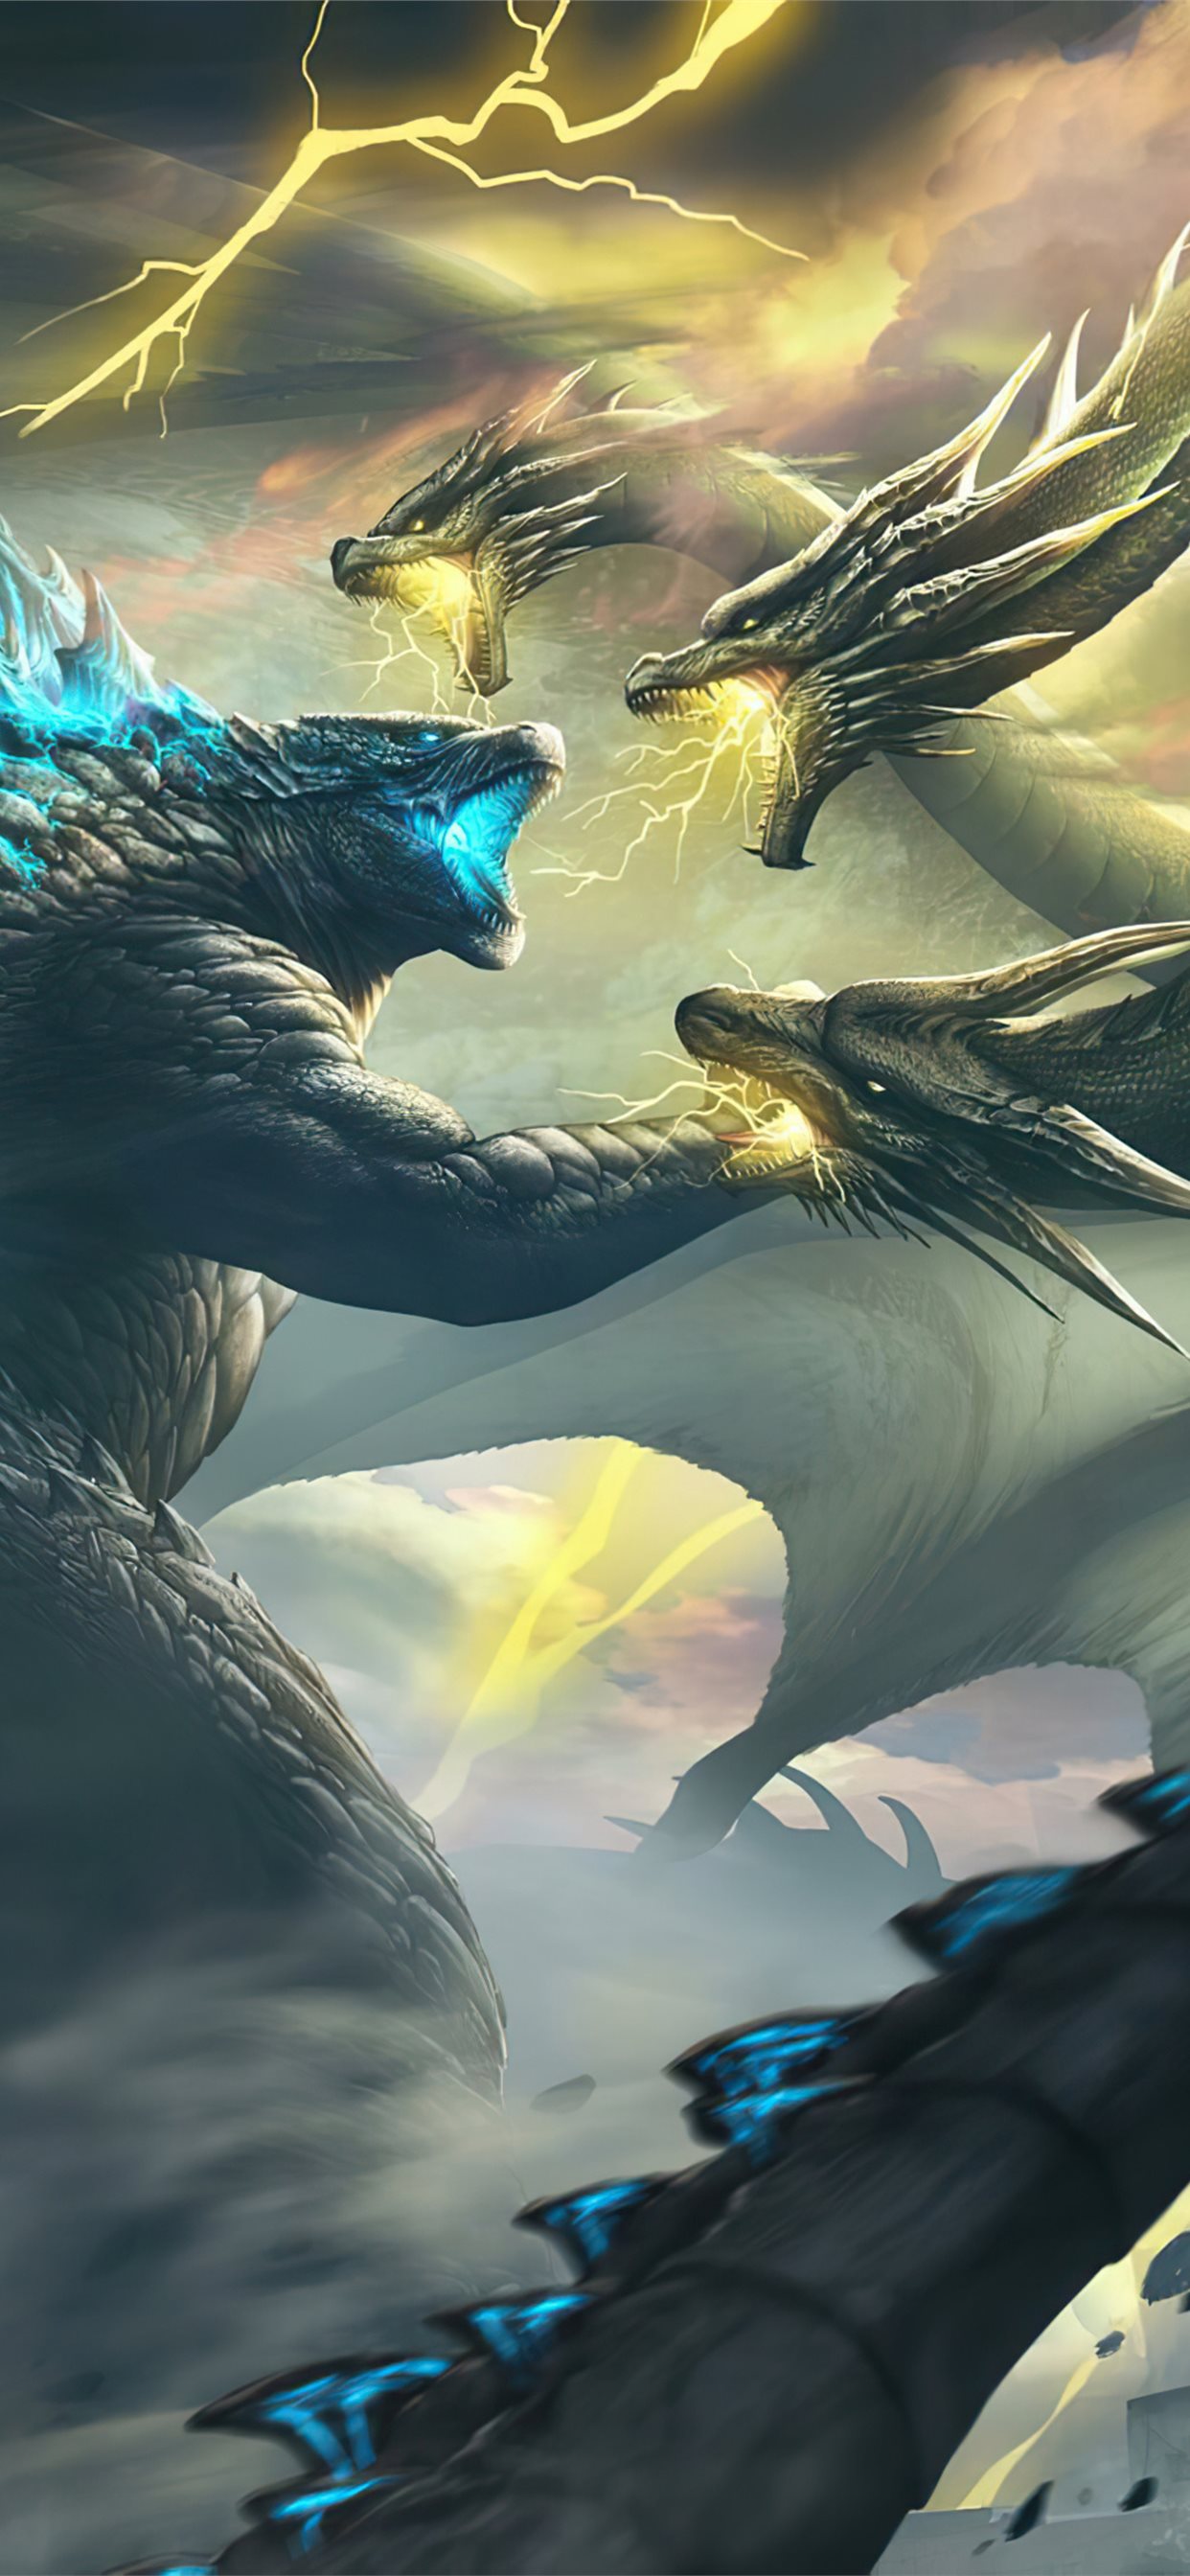 Wallpaper ID: 161713 / Godzilla: King of the Monsters, King Ghidorah,  kaiju, ultrawide free download